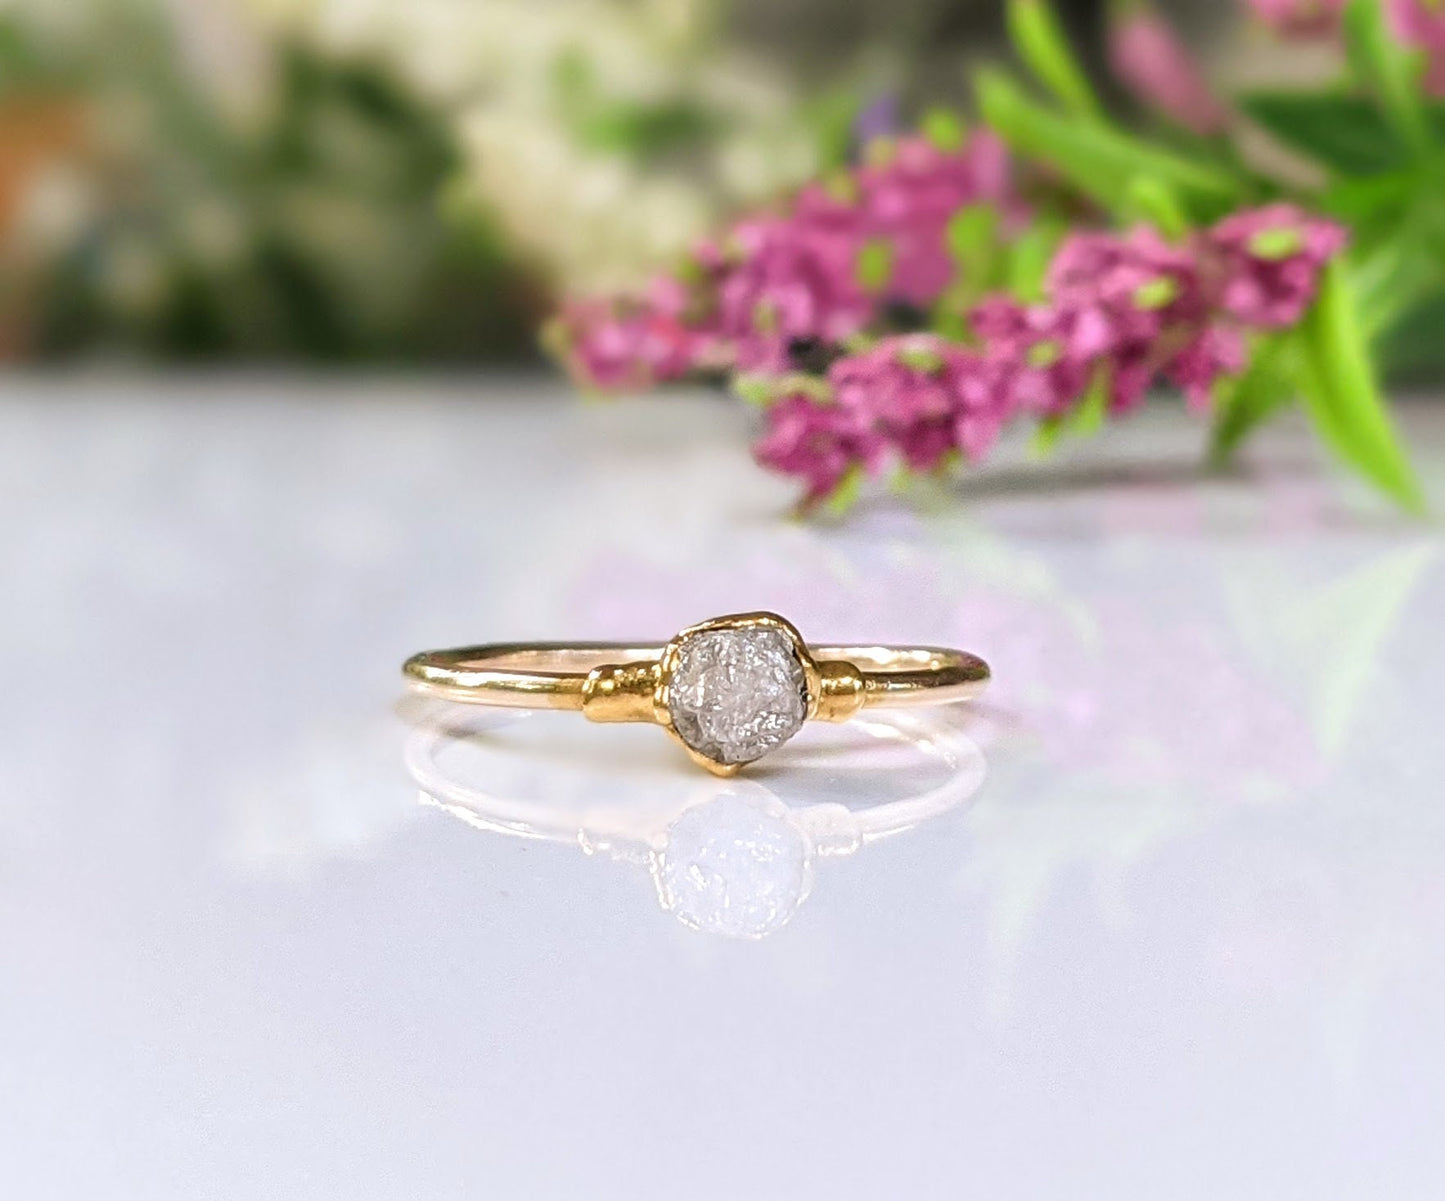 Raw rough diamond Engagement ring set in 18k Gold